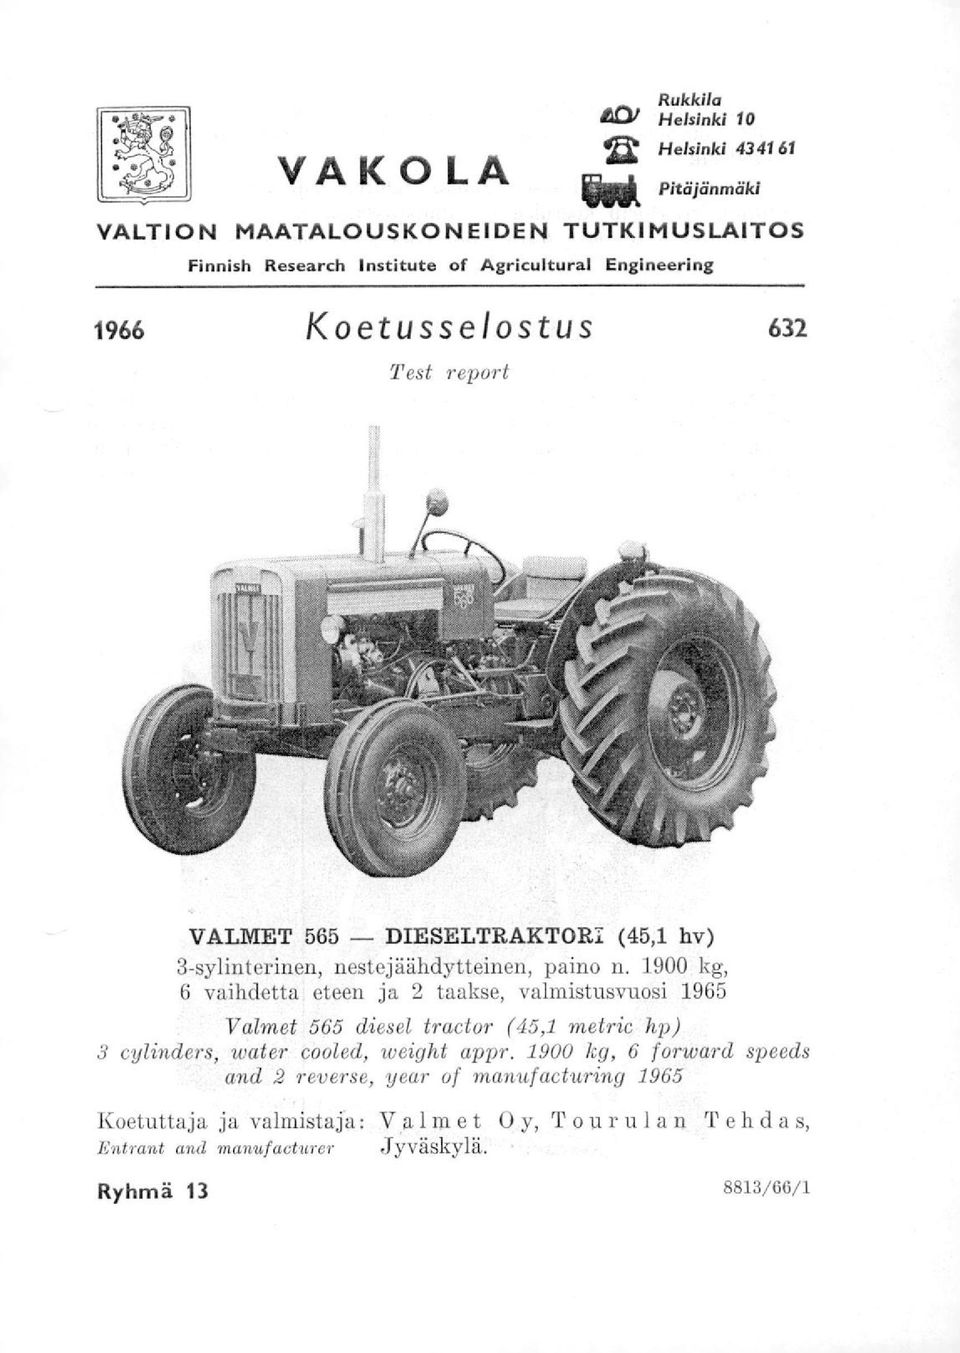 1900 kg, 6 vaihdetta eteen ja 2 taakse, valmistusvuosi 1965 Valmet 565 diesel tractor (45,1 metric hp) 3 cylinders, water cooled, weight appr.